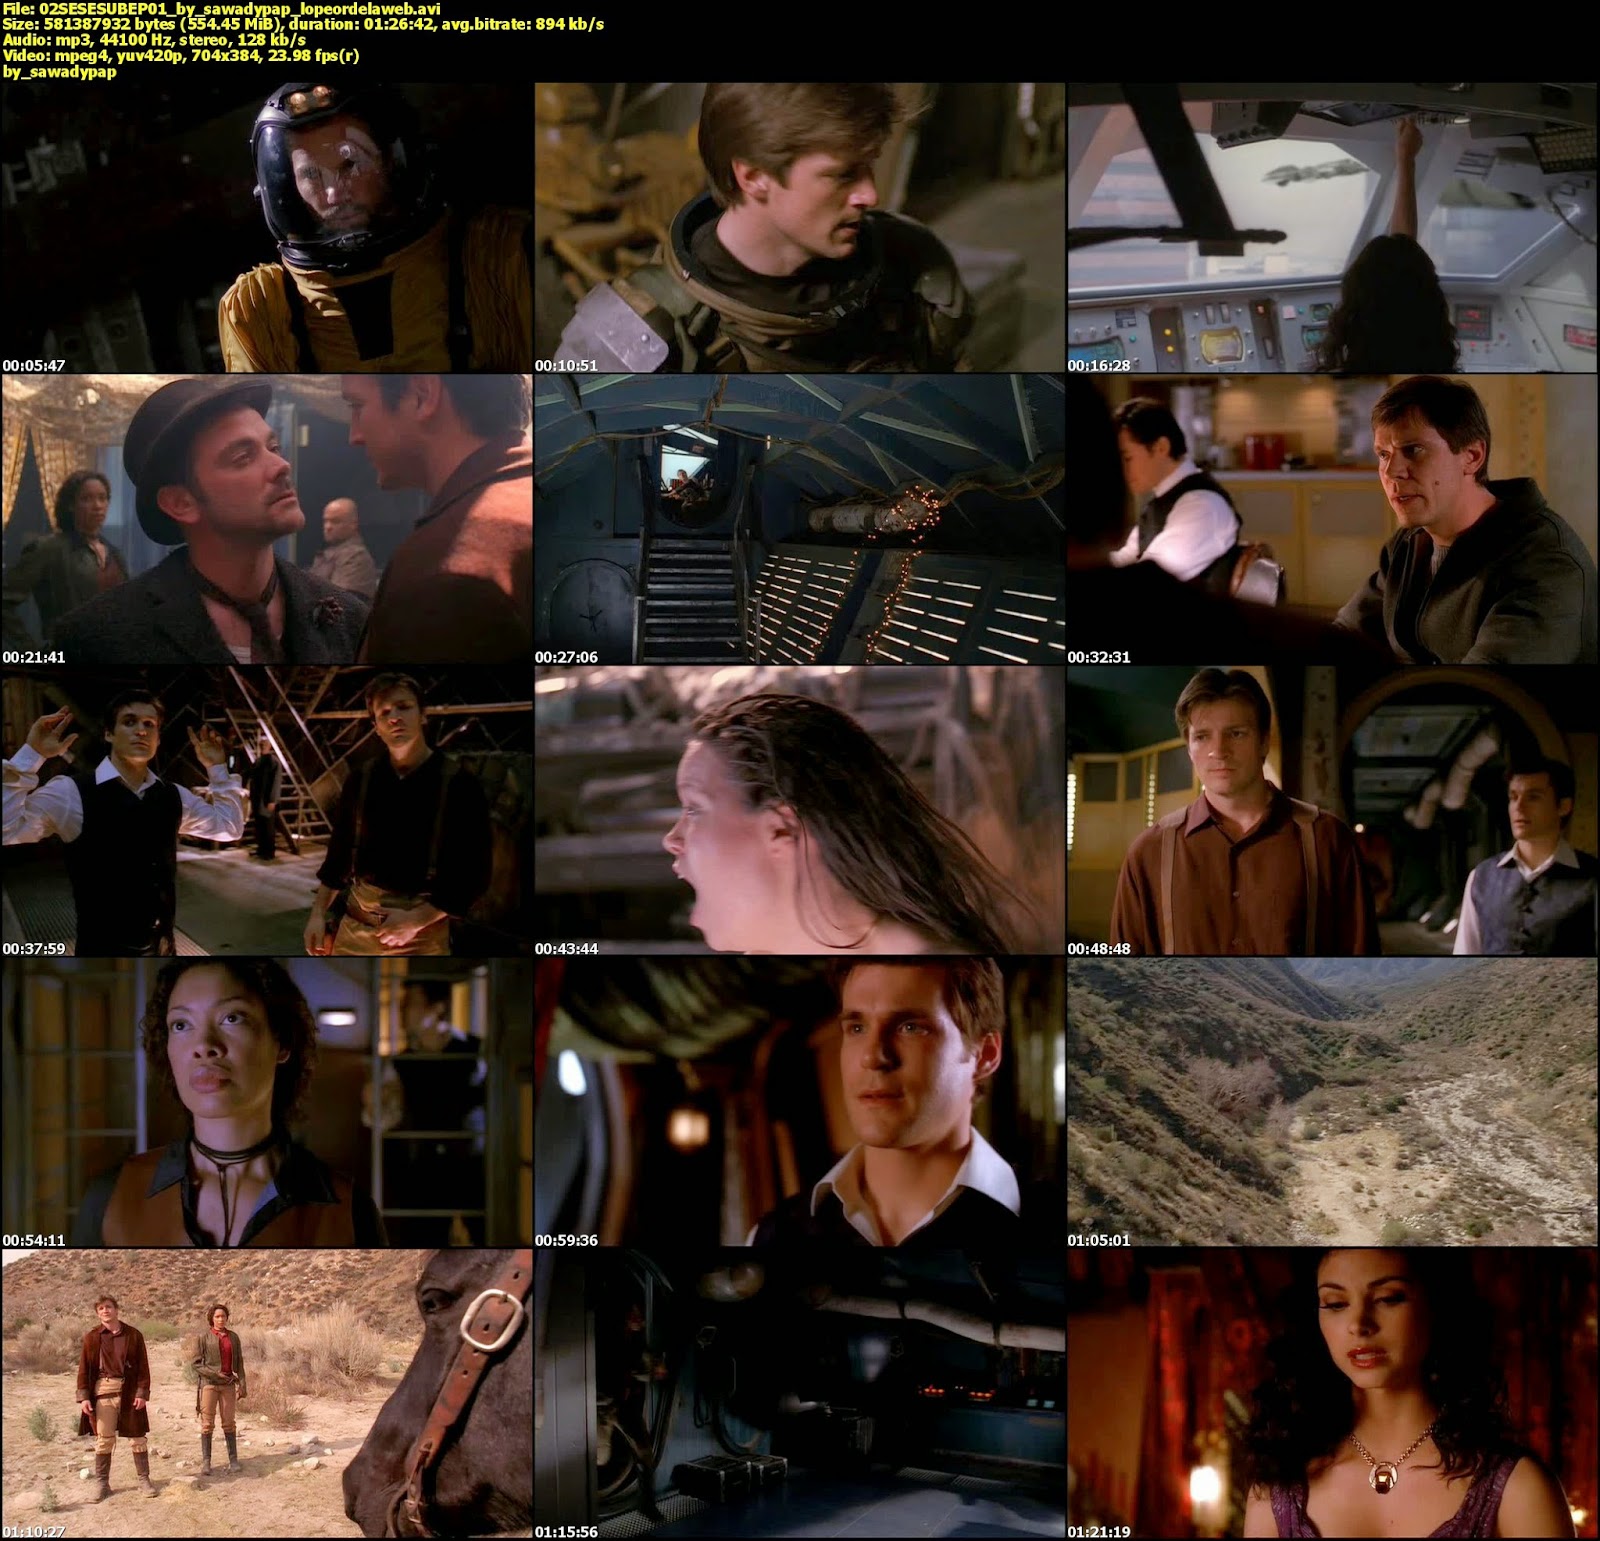 [Serie] Firefly [2002] [DVDRip] [Subtitulada]